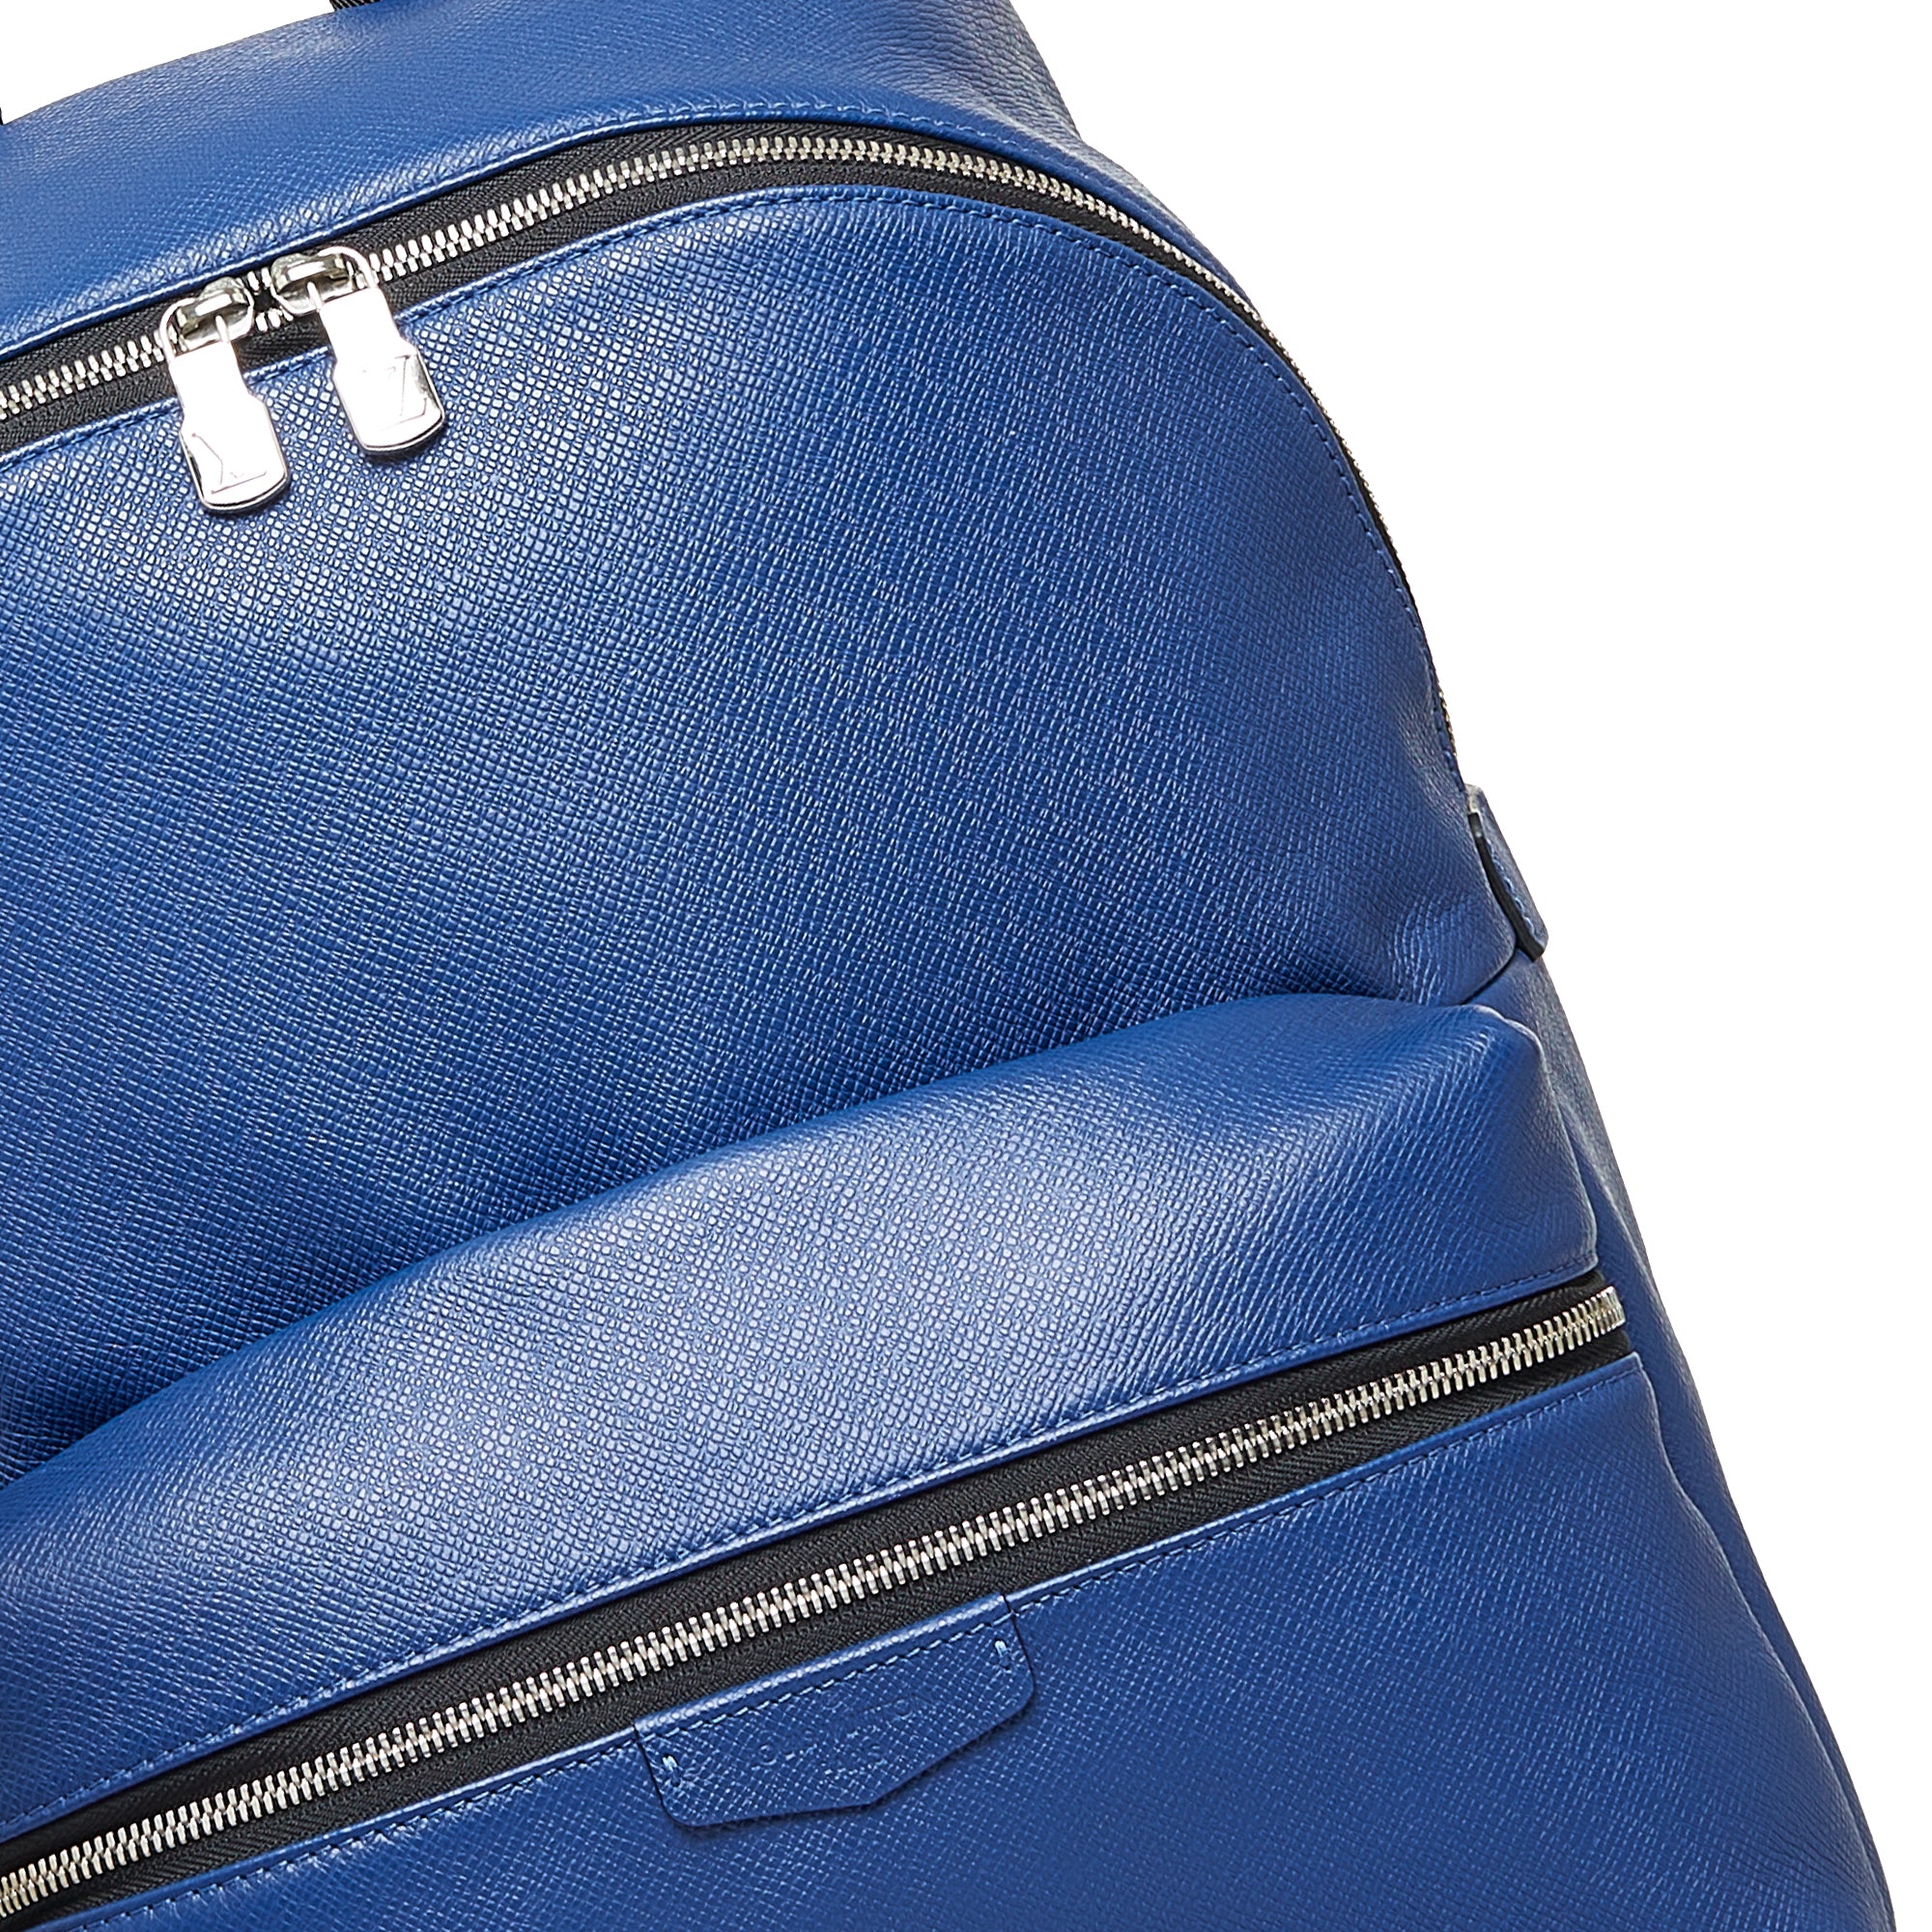 Blue Louis Vuitton Taïga Discovery Backpack PM